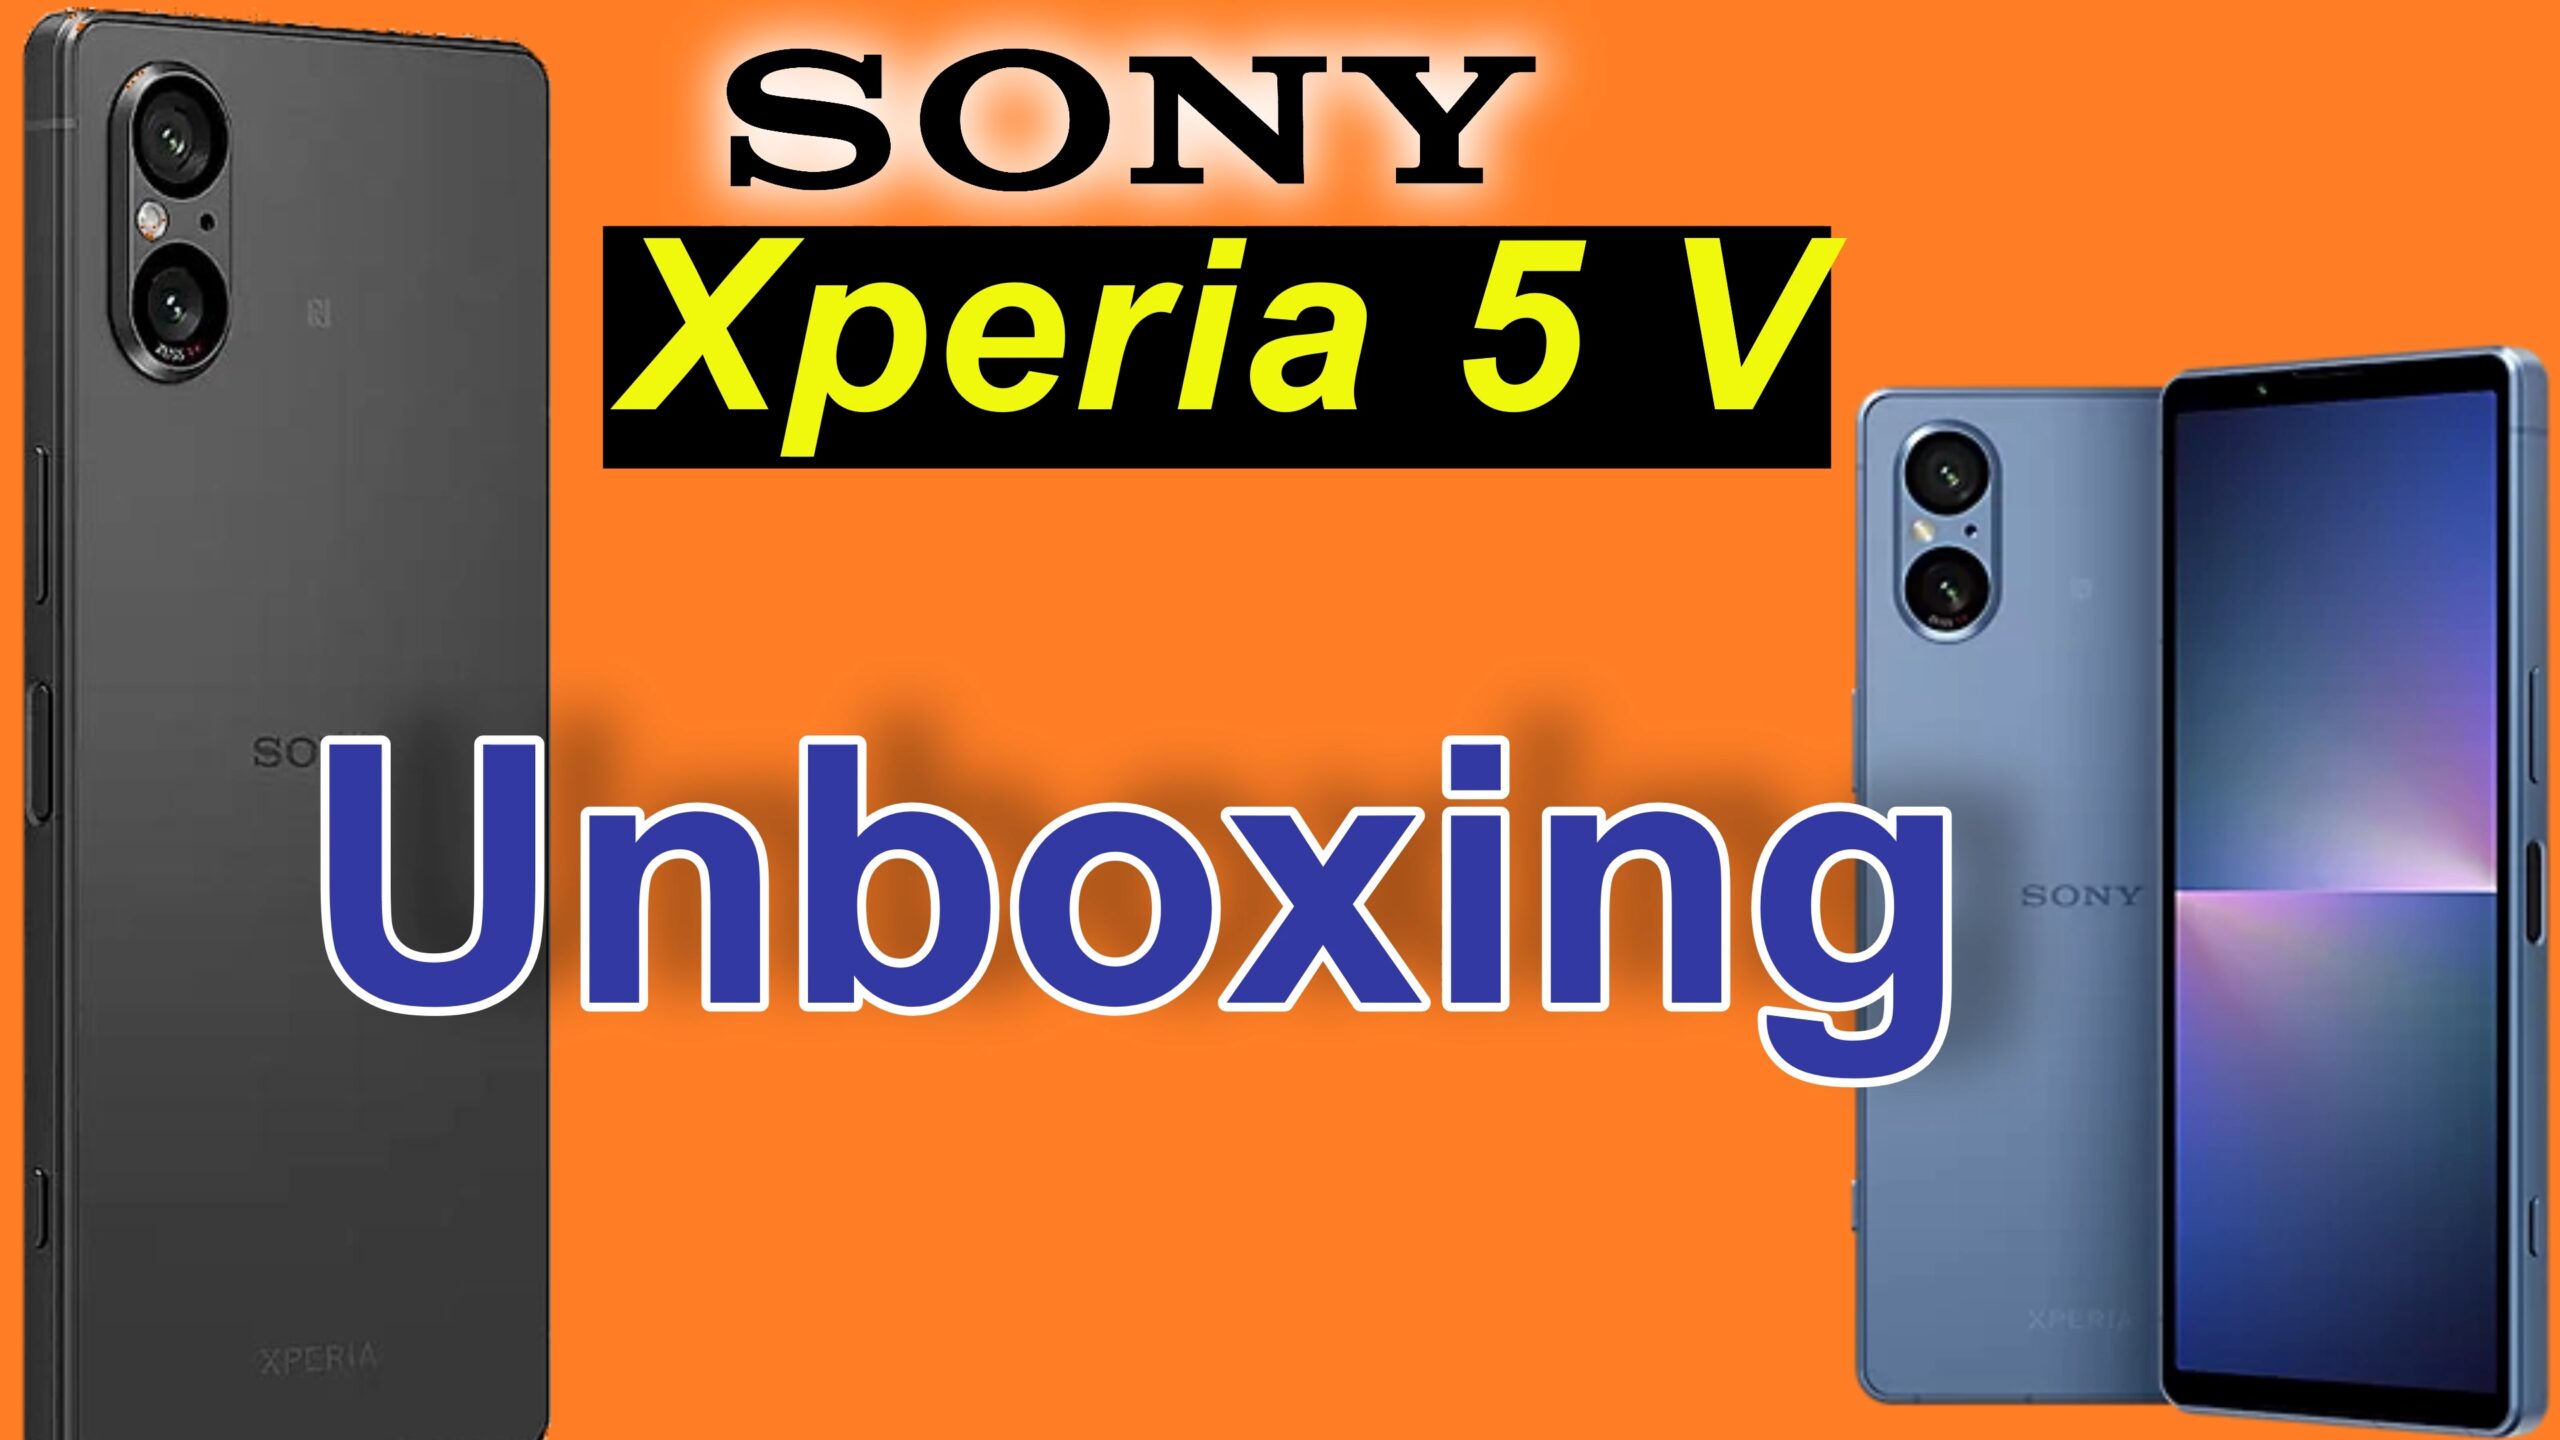 Sony Xperia 5 V - Unboxing und Ersteindruck